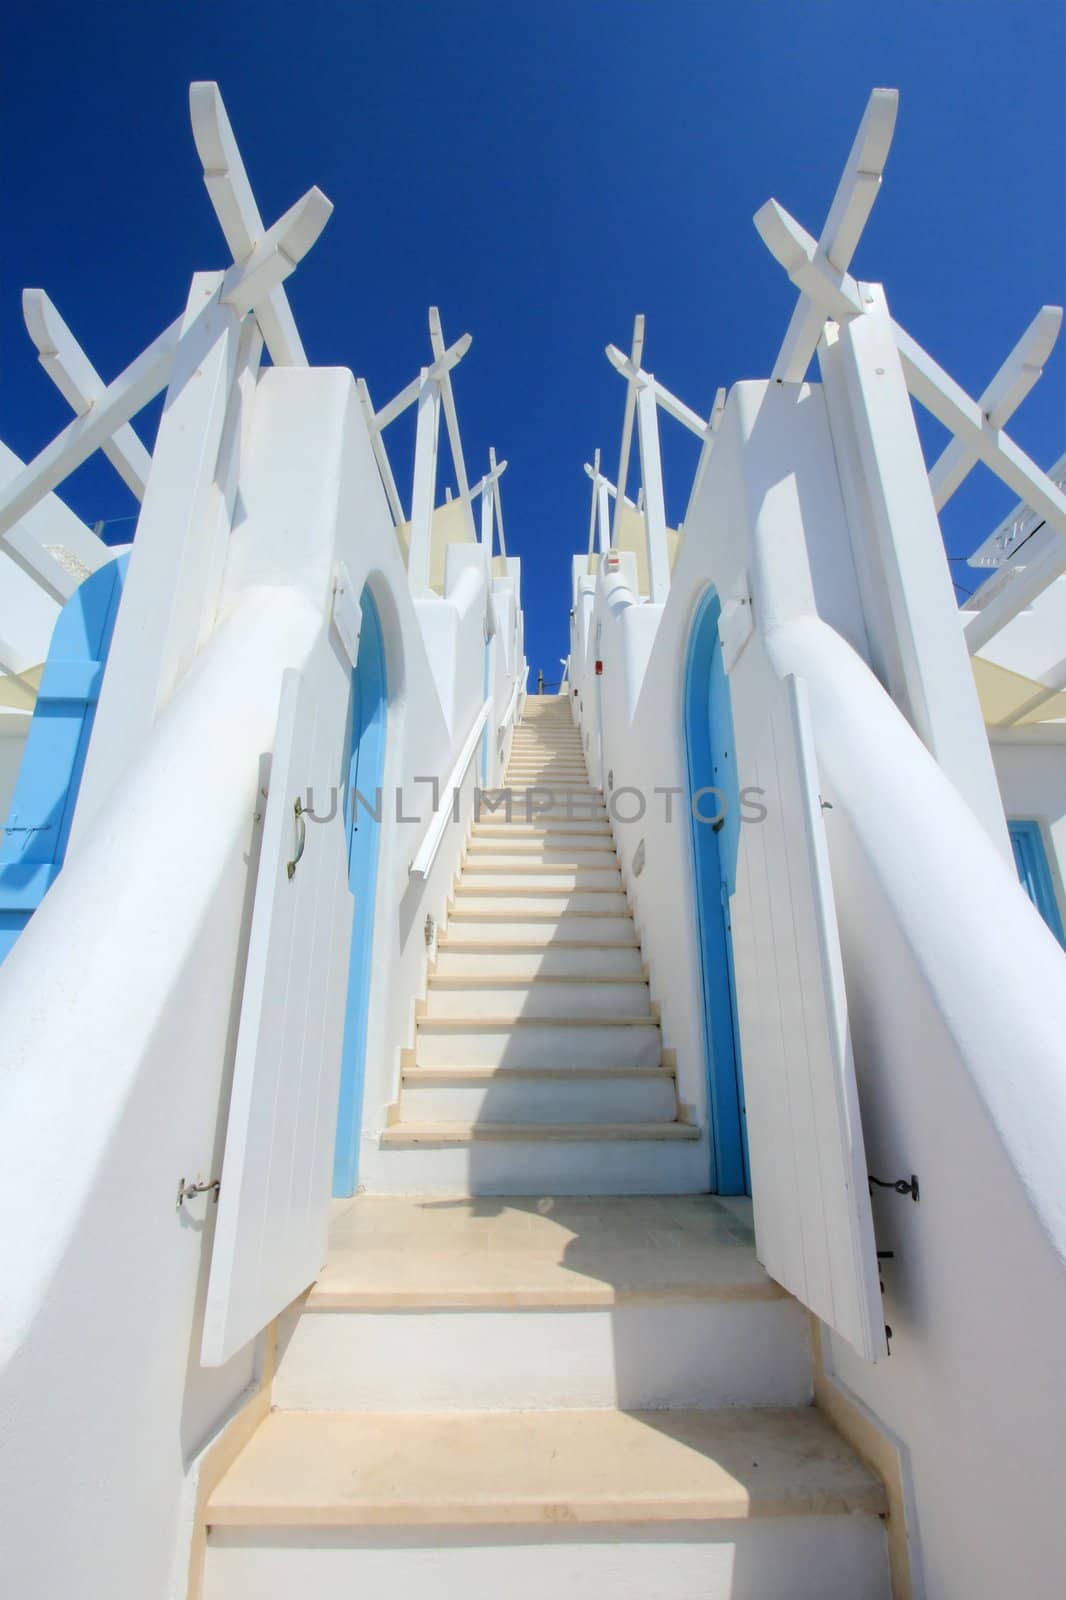 Stairs, Santorini, Greece by Elenaphotos21